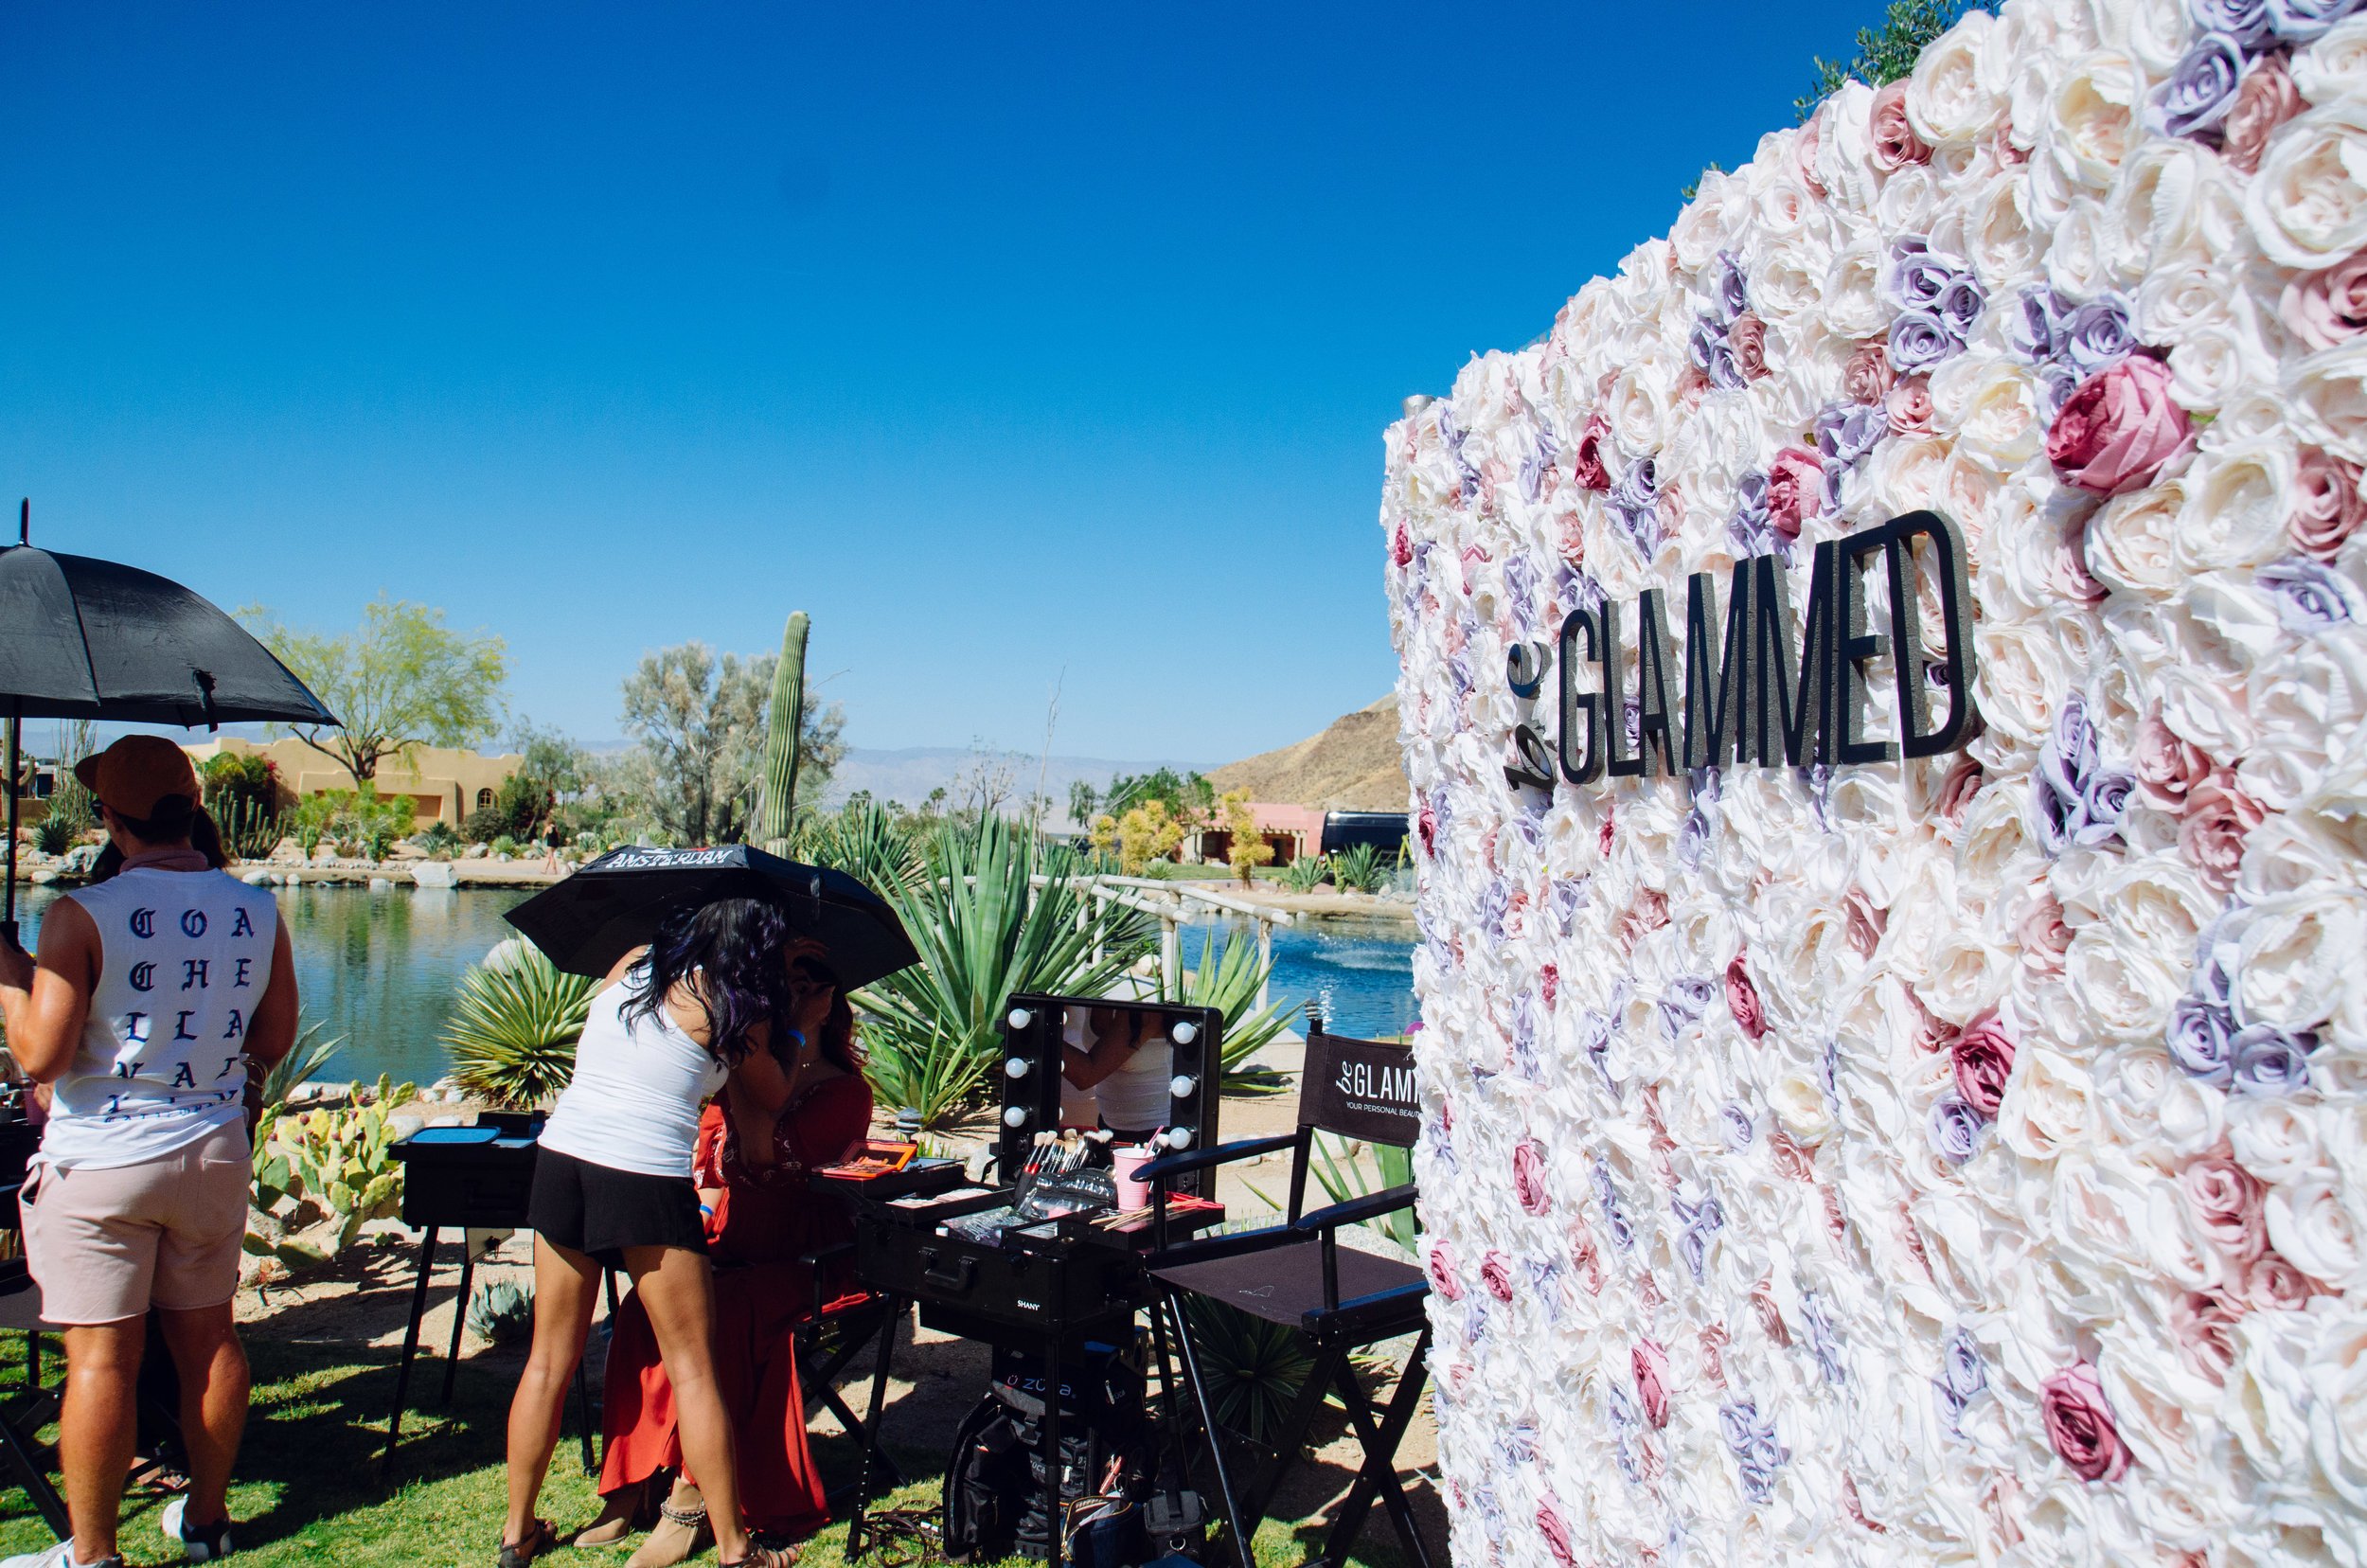 Ultimate Hollywood Coachella Poolside Party beGlammed rose wall.jpg